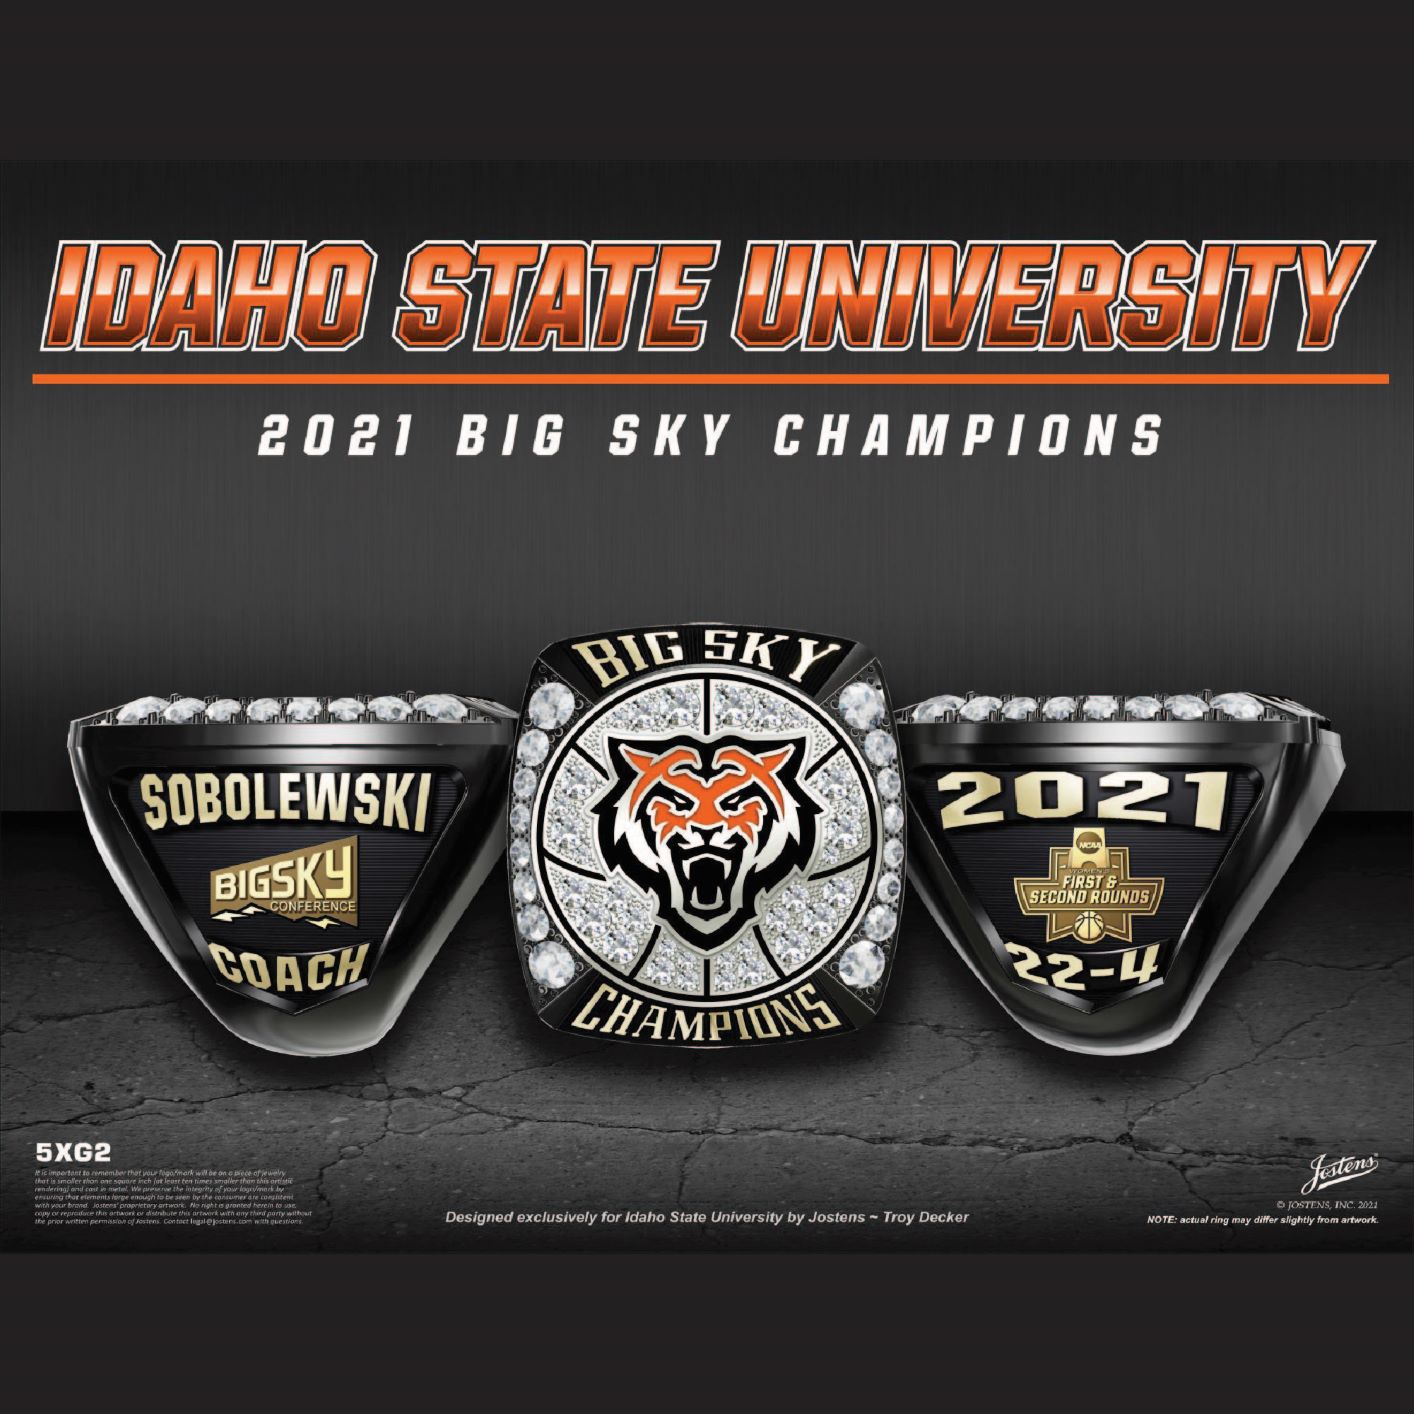 Idaho State University Women's Basketball 2021 Big Sky Championship Ring